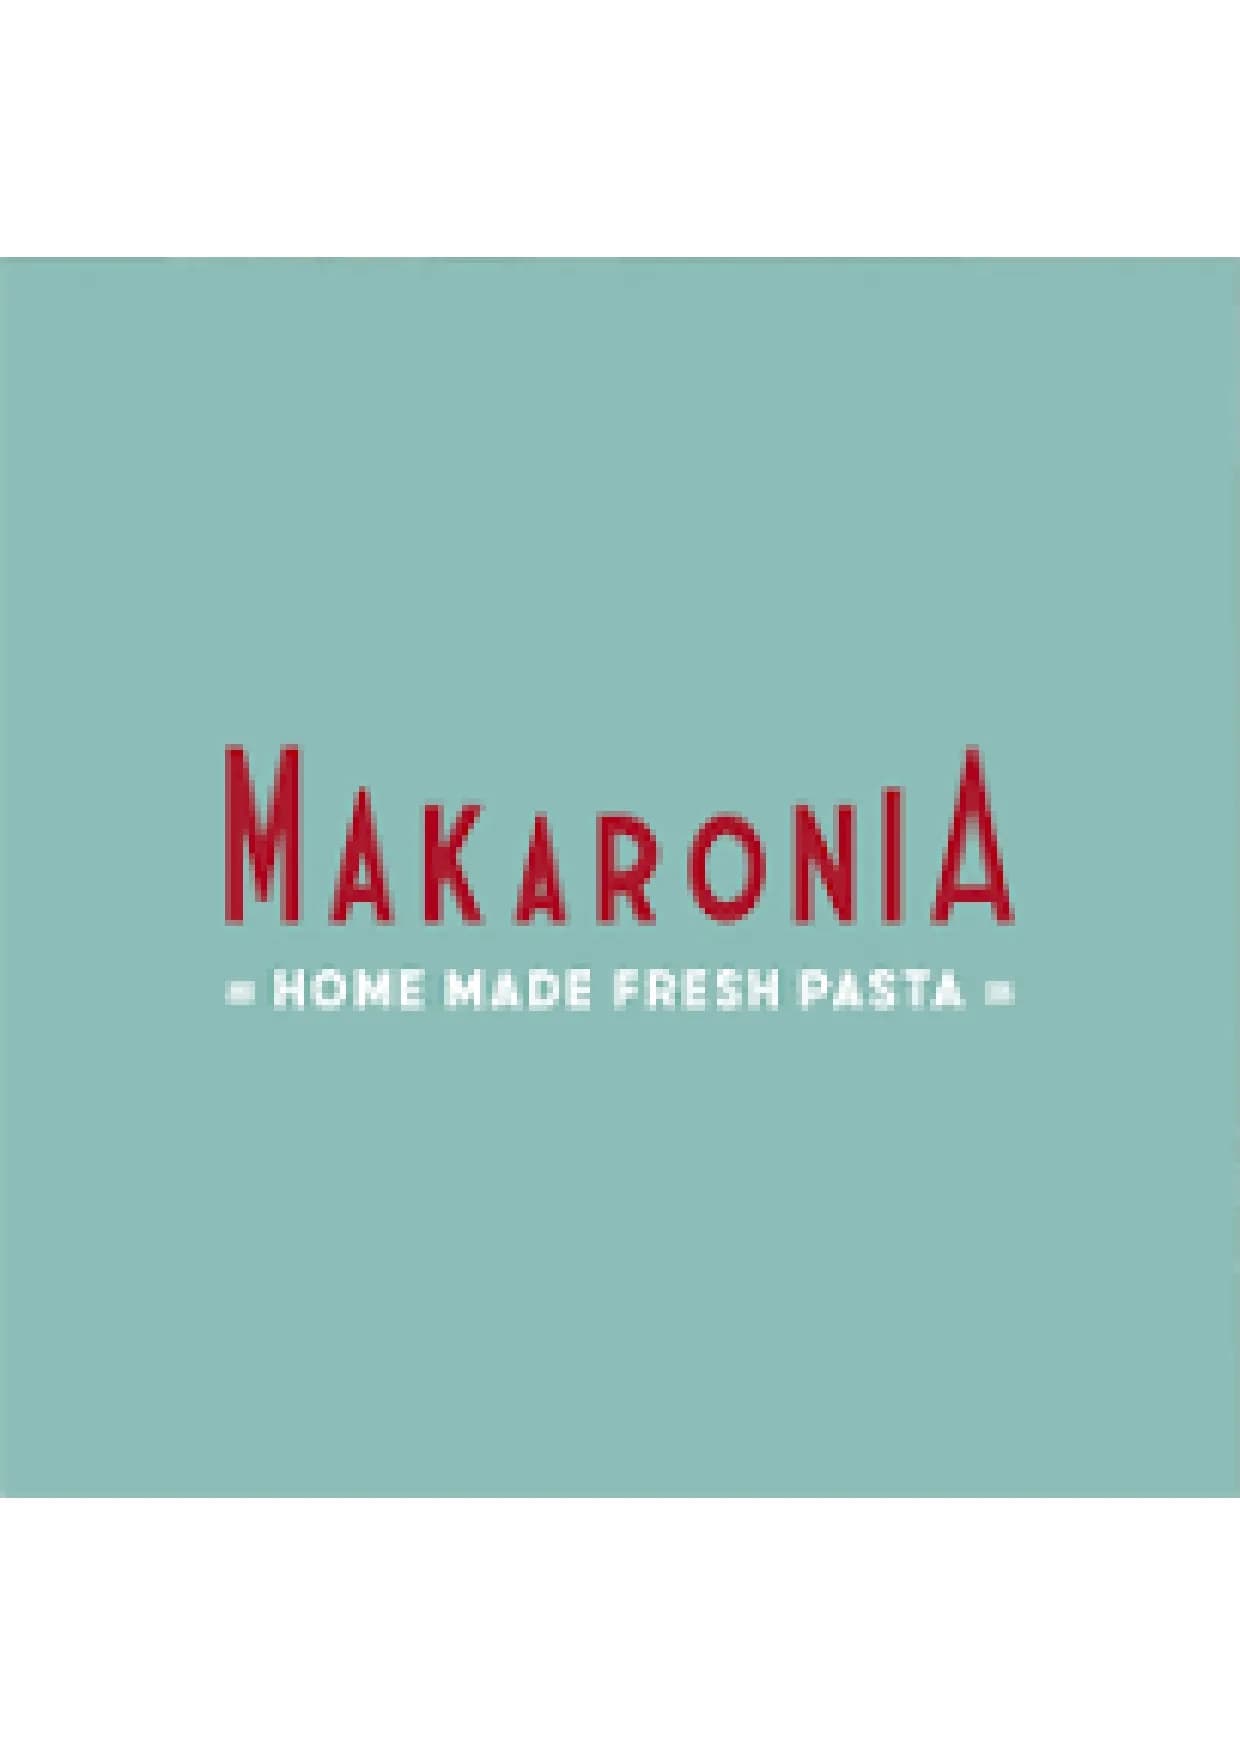 Makaronia Pasta and Pizza